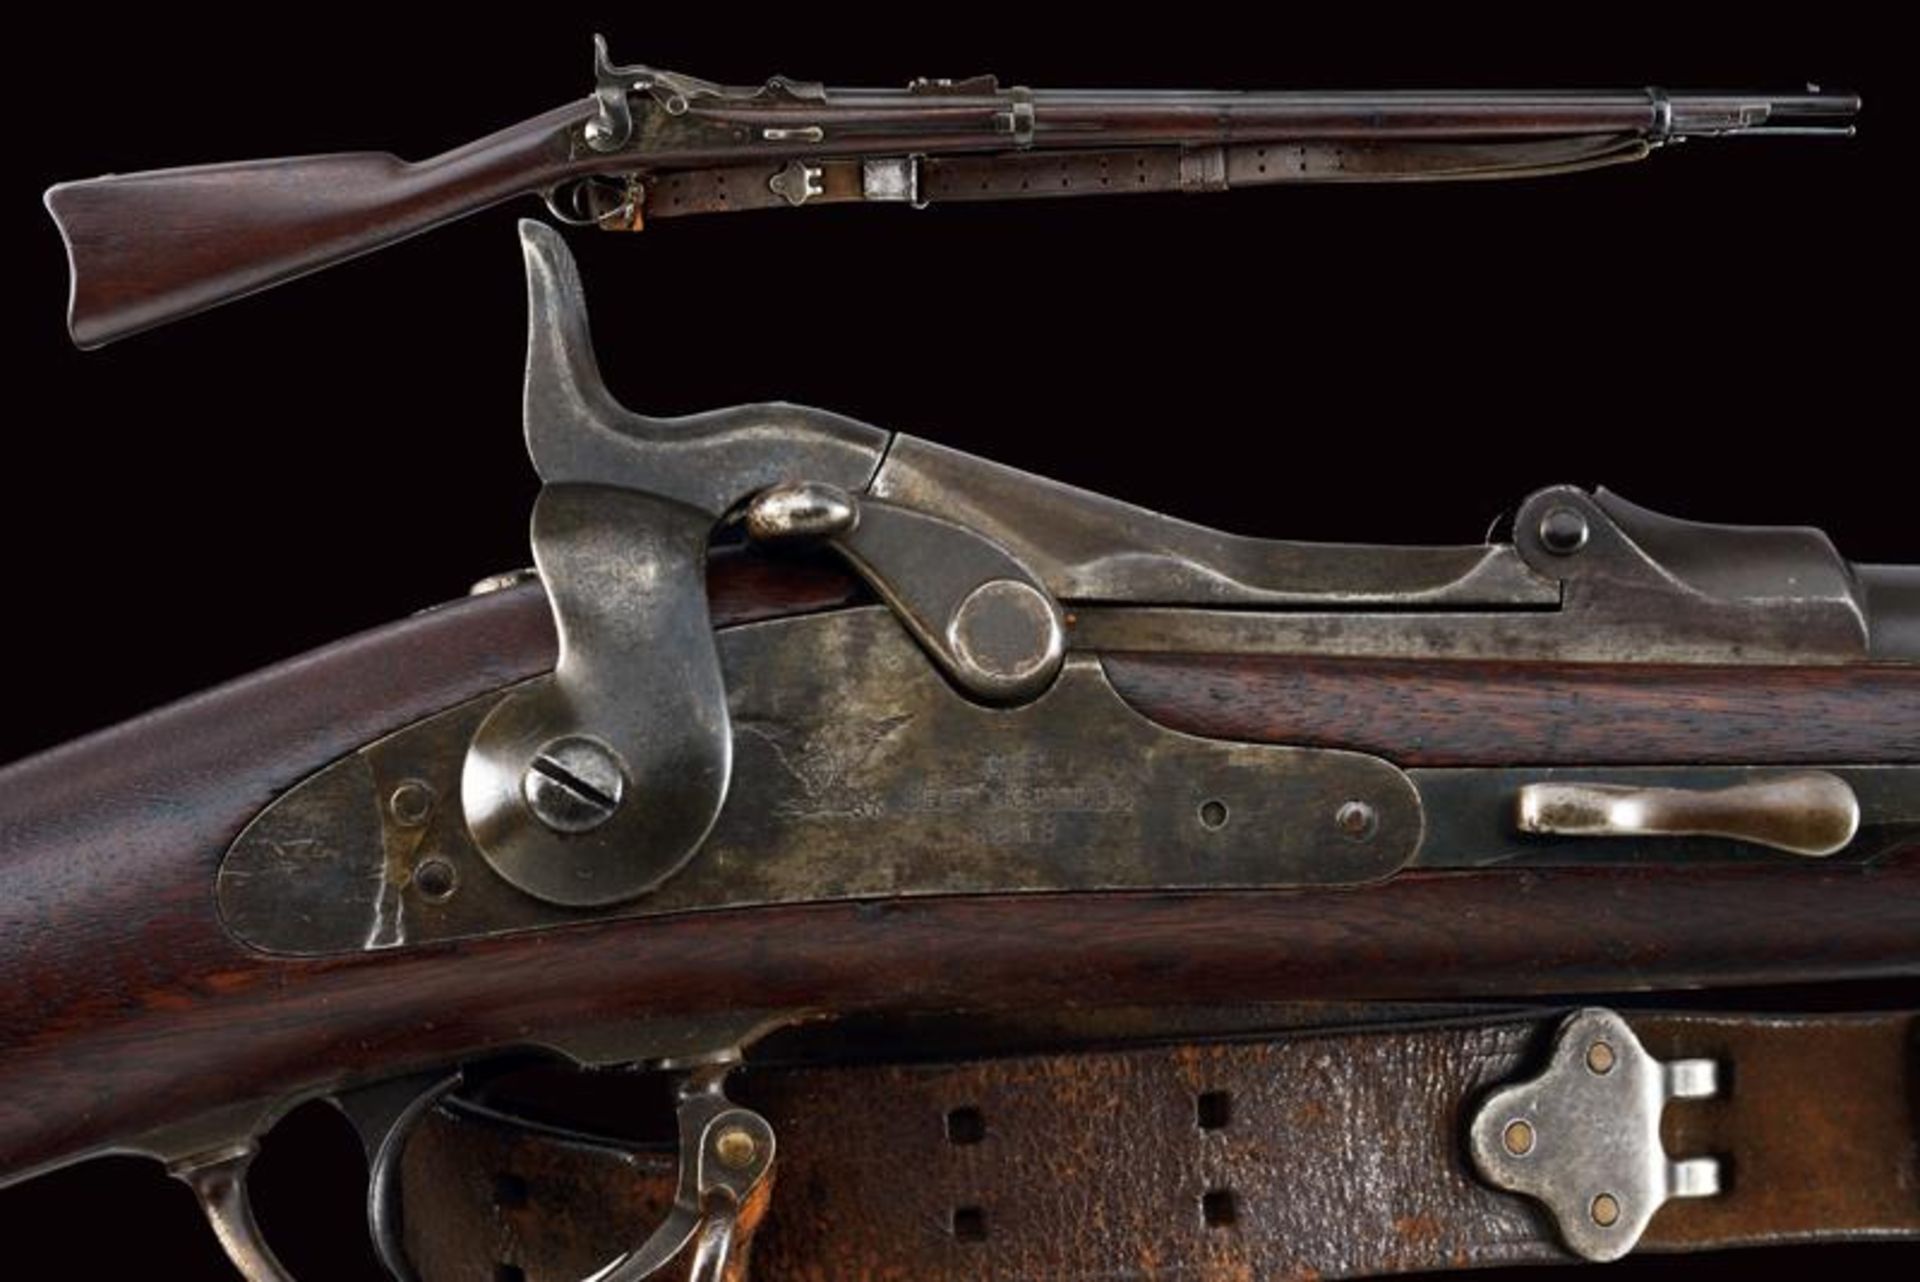 A rare 1873 model Springfield Trapdoor breechloading rifle